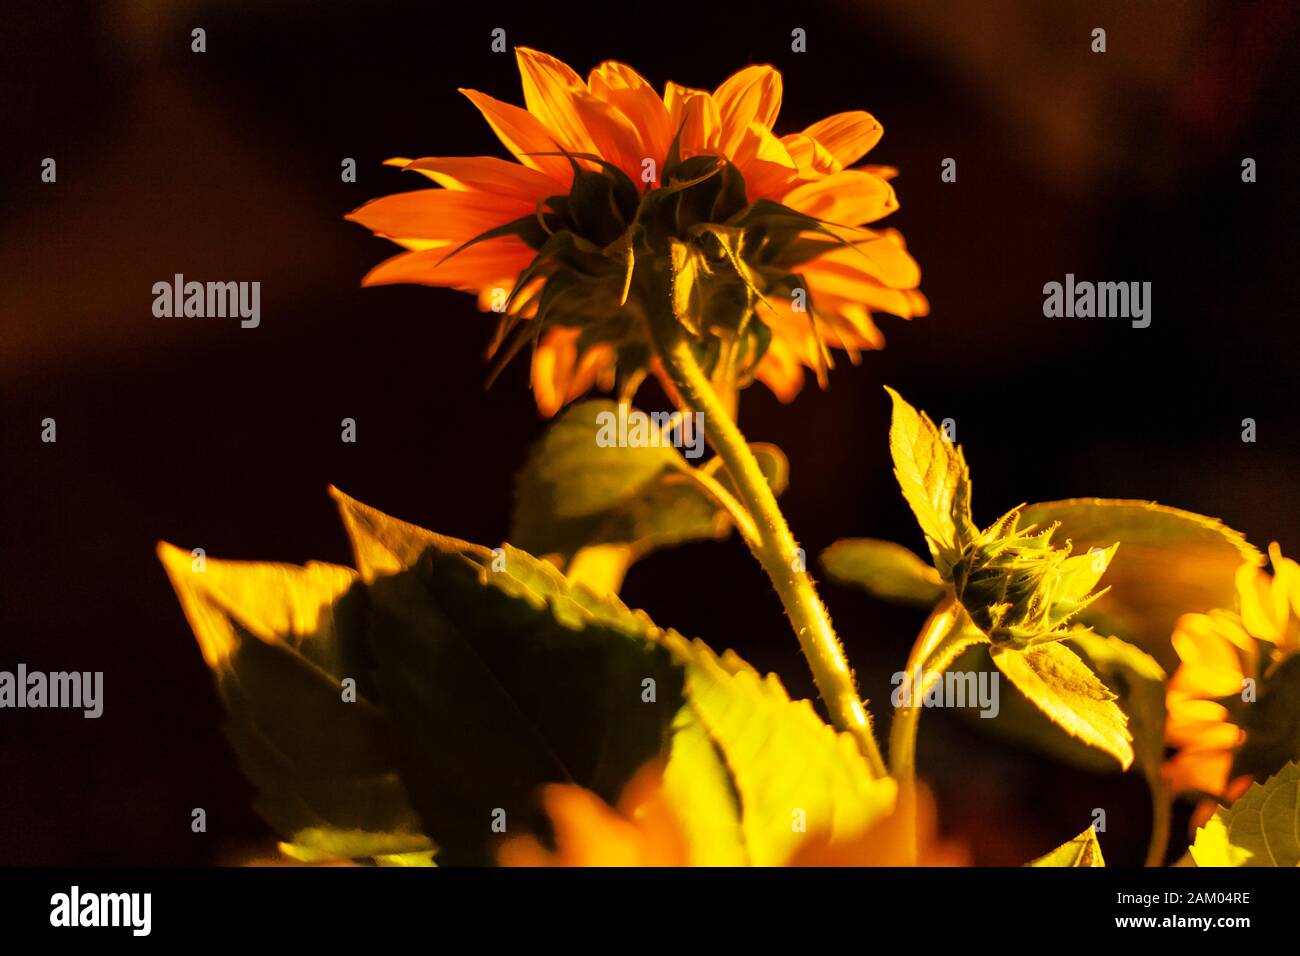 Sunflower in a Ray of Sunlight.jpg Stock Photo